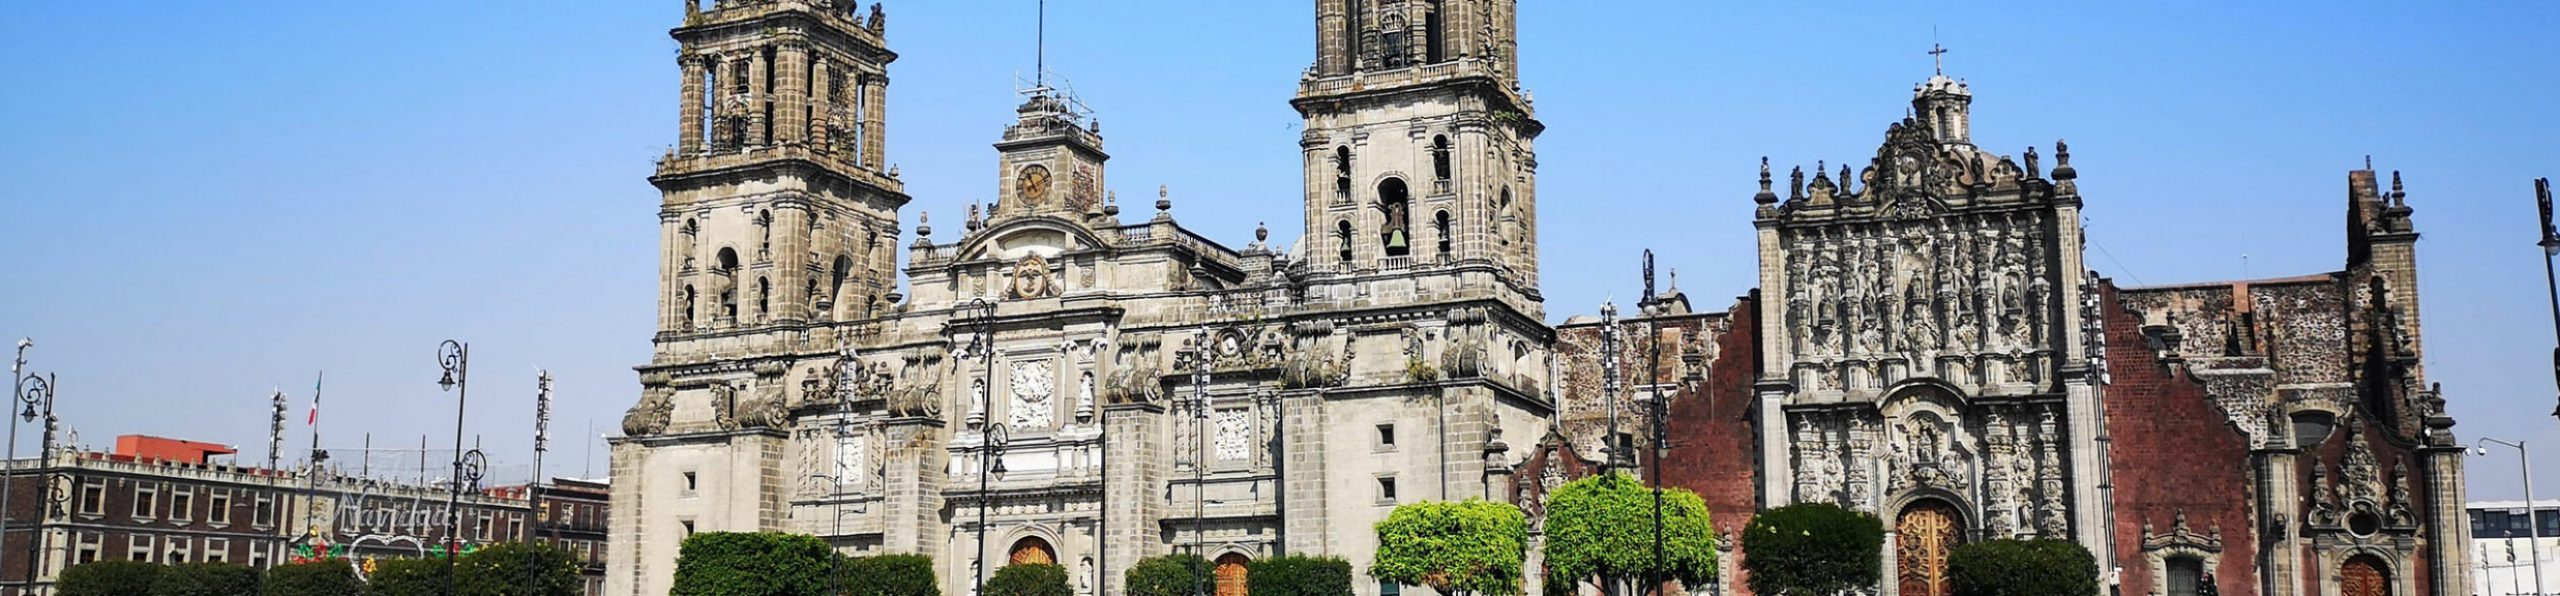 mexico city Centro histórico de la ciudad de méxico with a blue sky